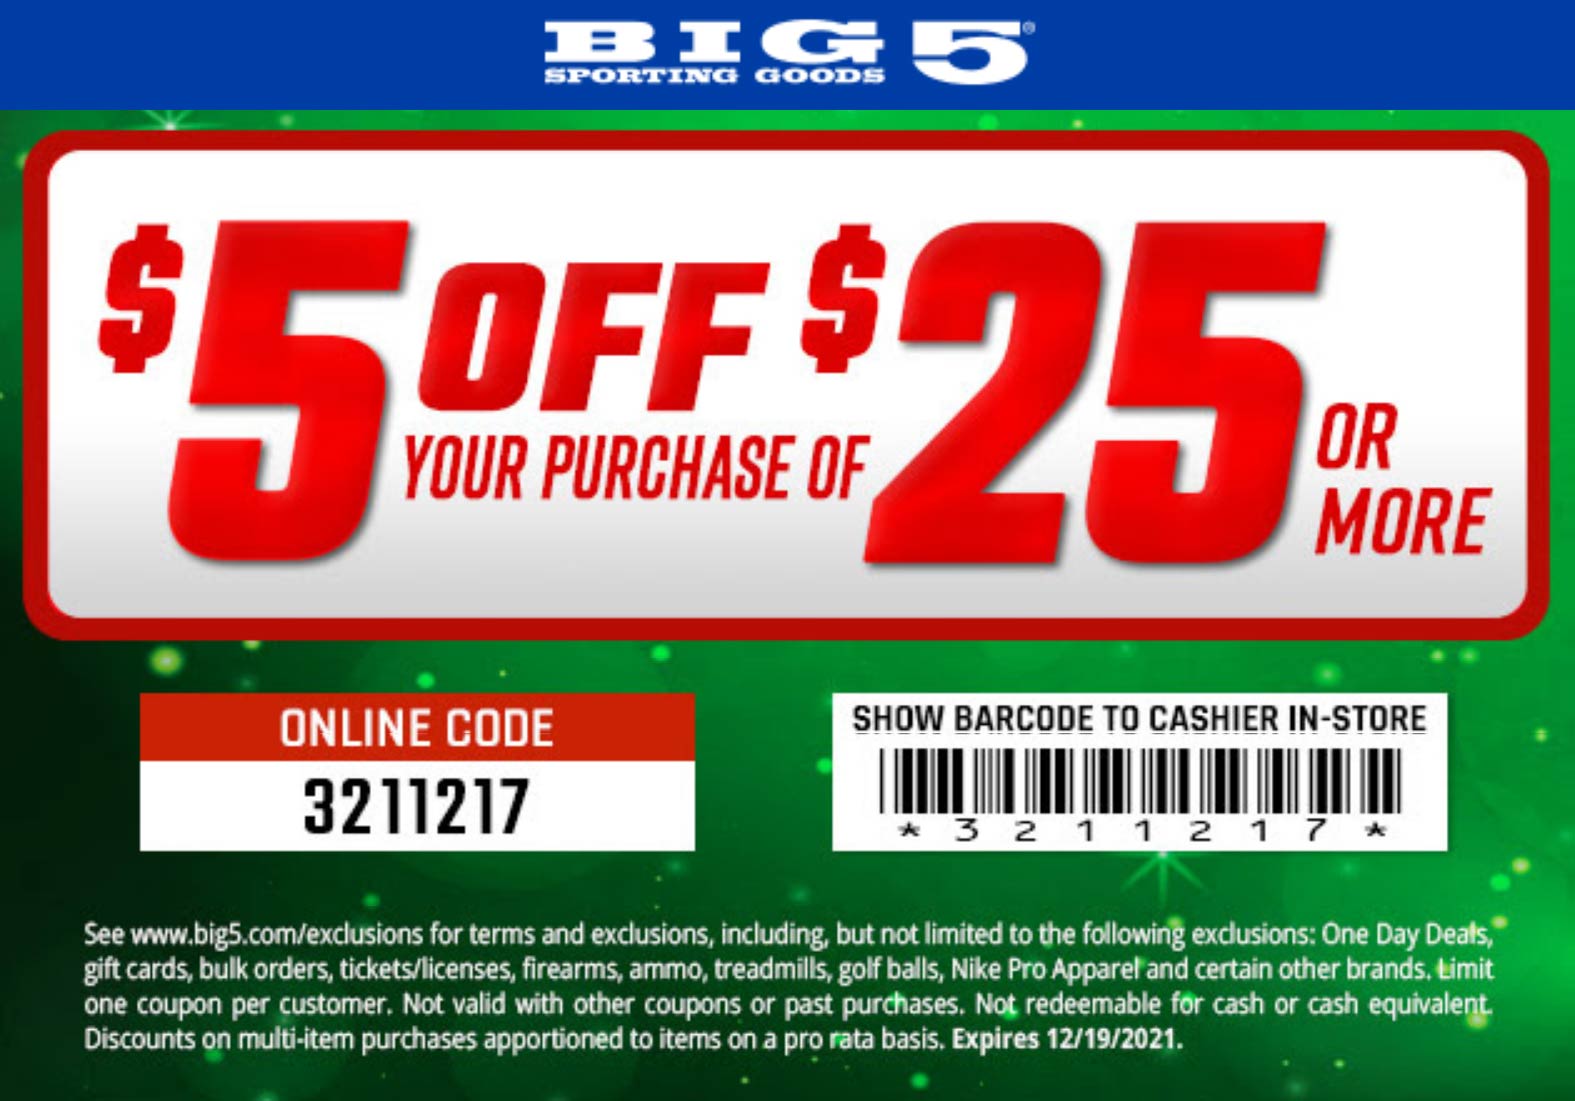 Big 5 stores Coupon  $5 off $25 at Big 5 Sporting goods, or online via promo code 3211217 #big5 